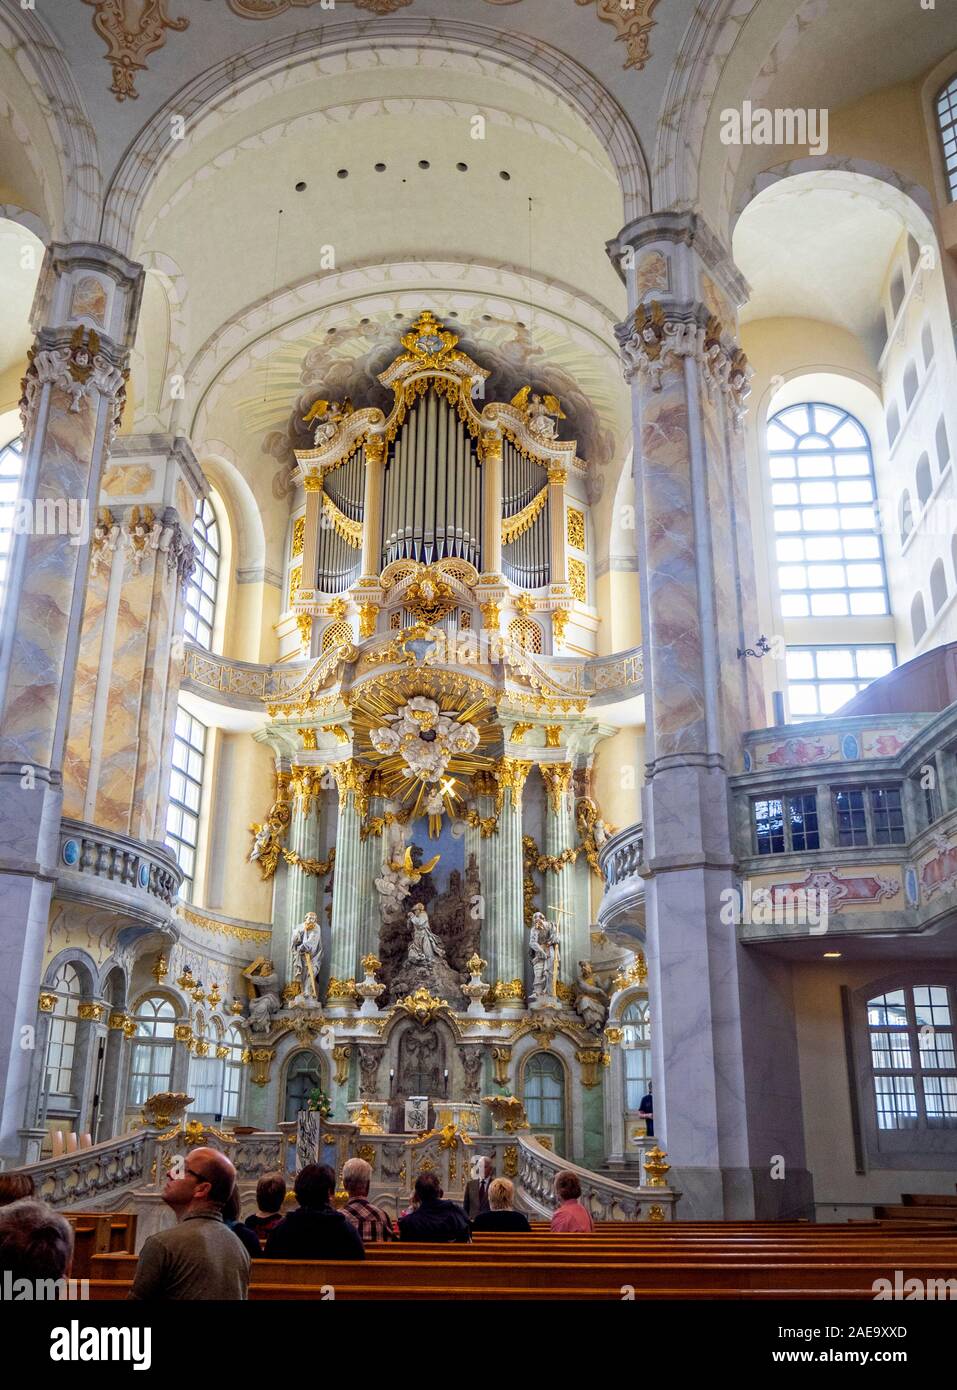 Alter and church organ pipes interior Frauenkirche Church of Our Lady Platz Neumarkt Newmarket Altstadt Dresden Saxony Germany. Stock Photo